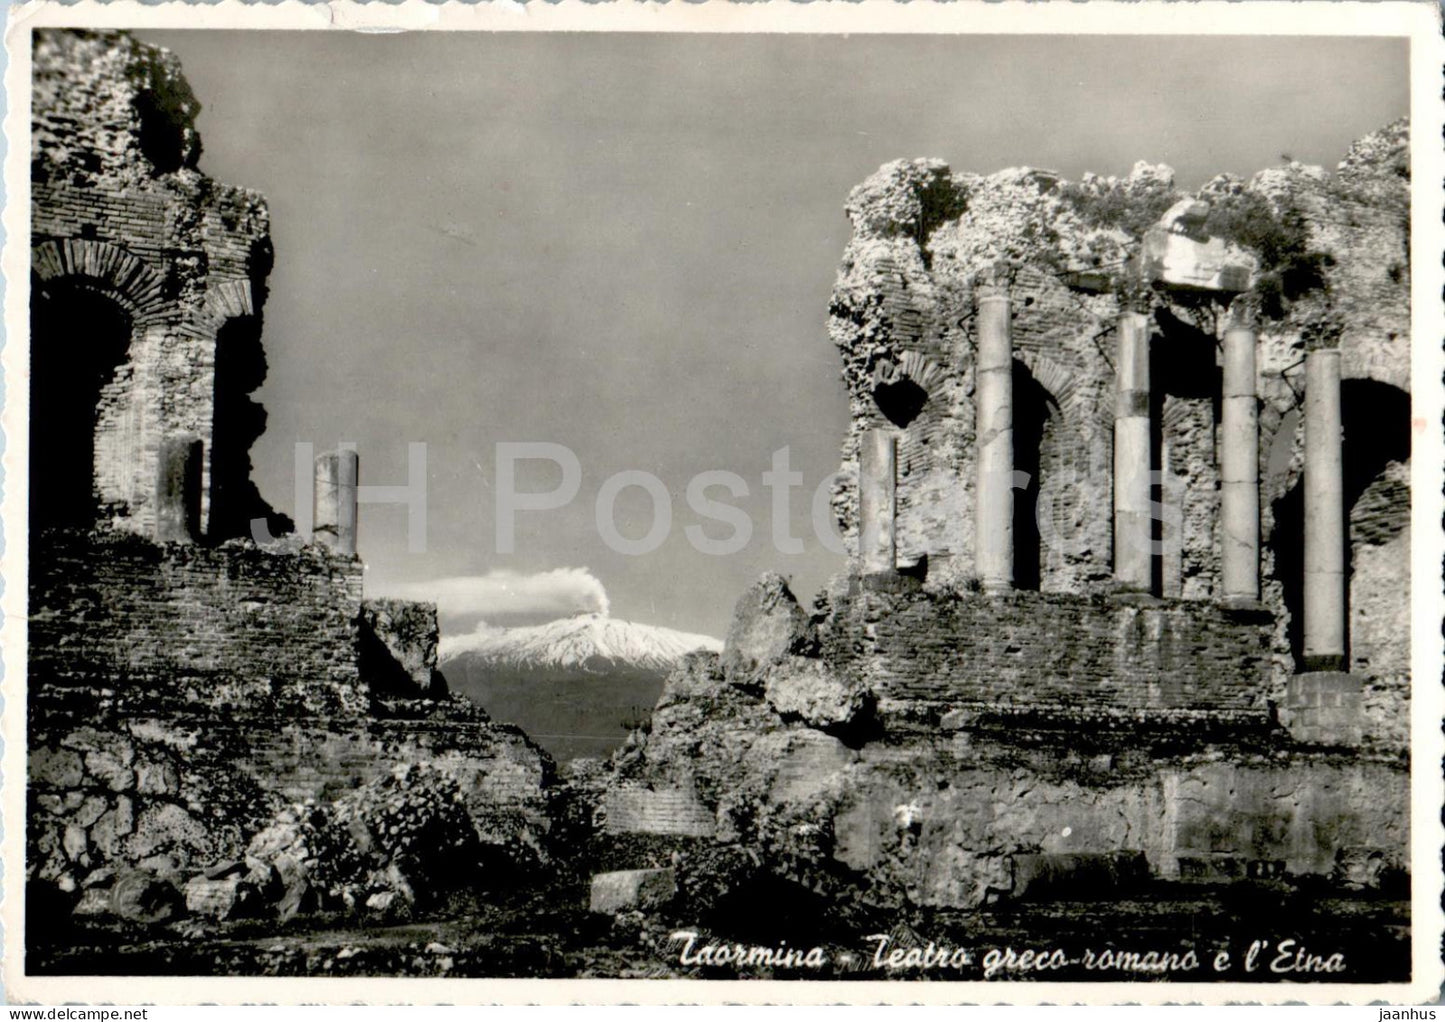 Taormina - Teatro greco romano e l'Etna - ancient world - 23 - old postcard - 1957 - Italy - used - JH Postcards